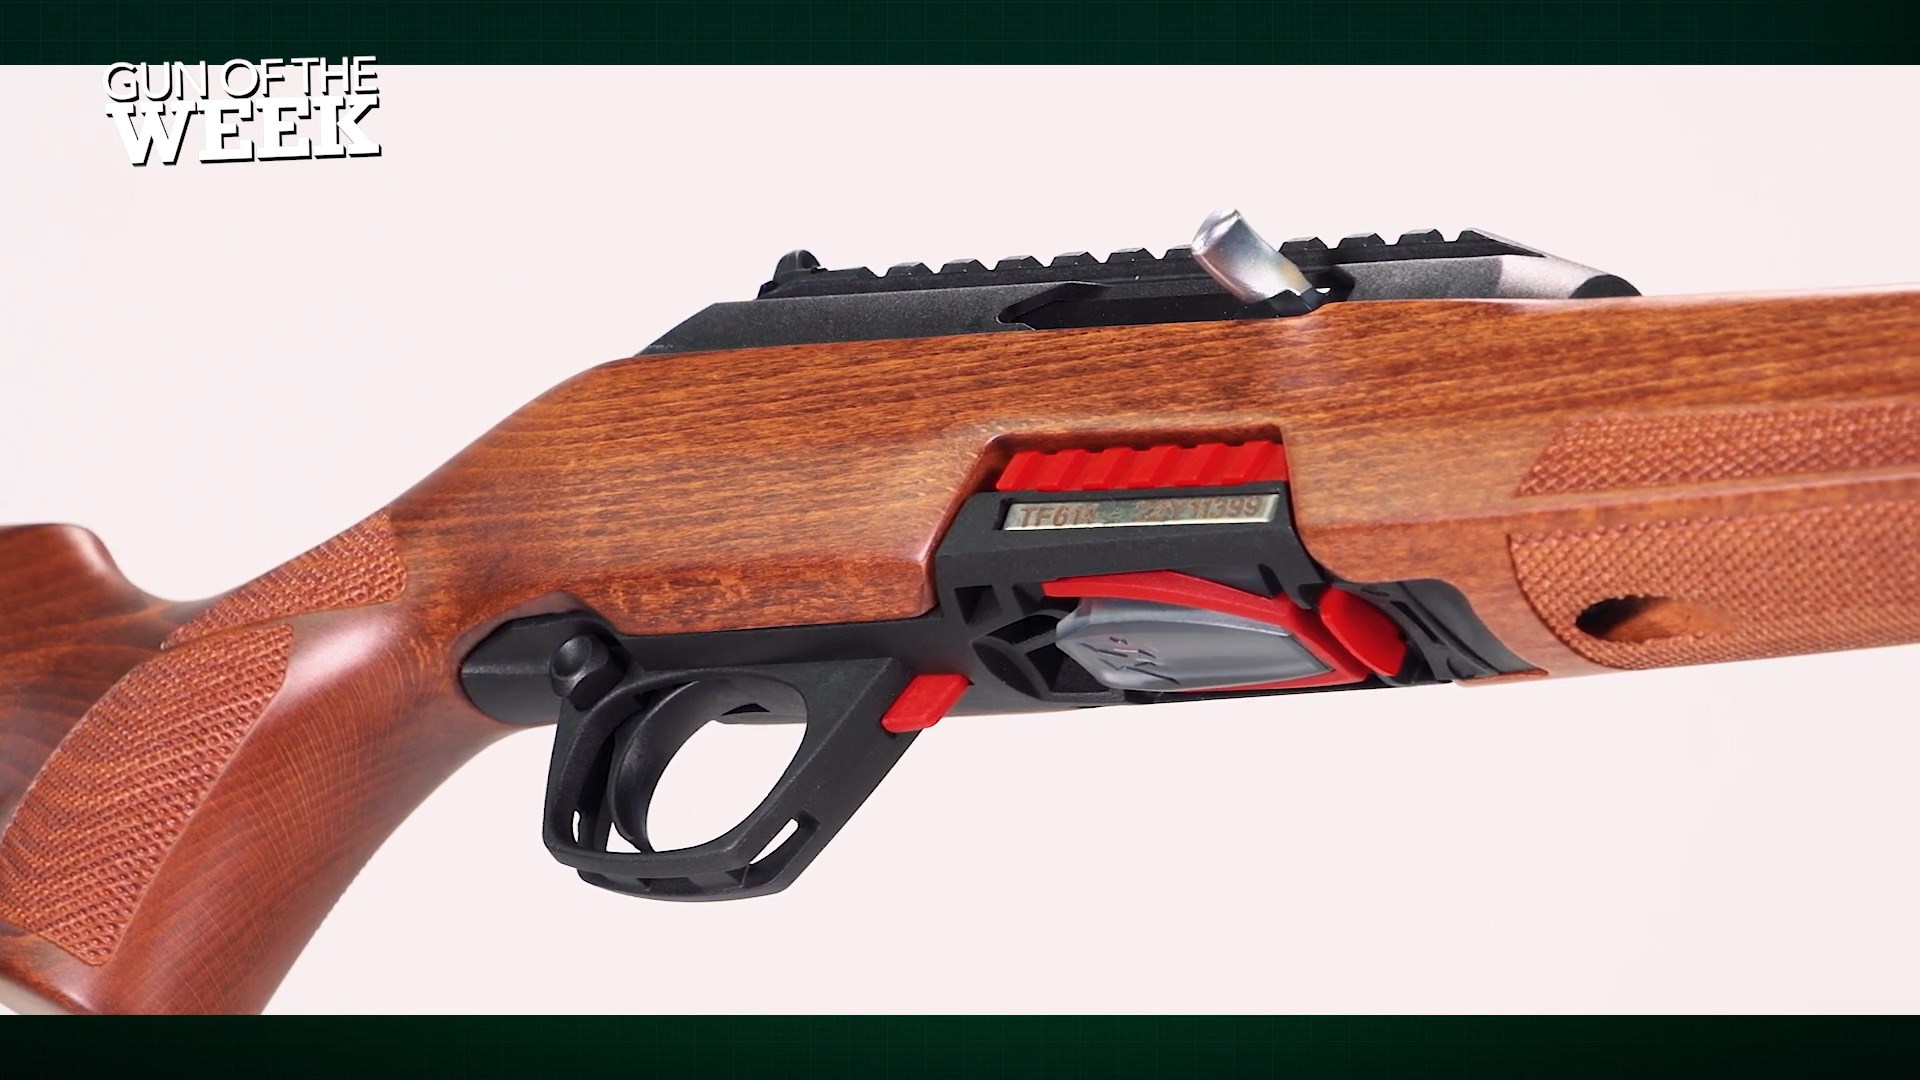 Winchester wildcat sporter sr right-side view wood stock red strip gun